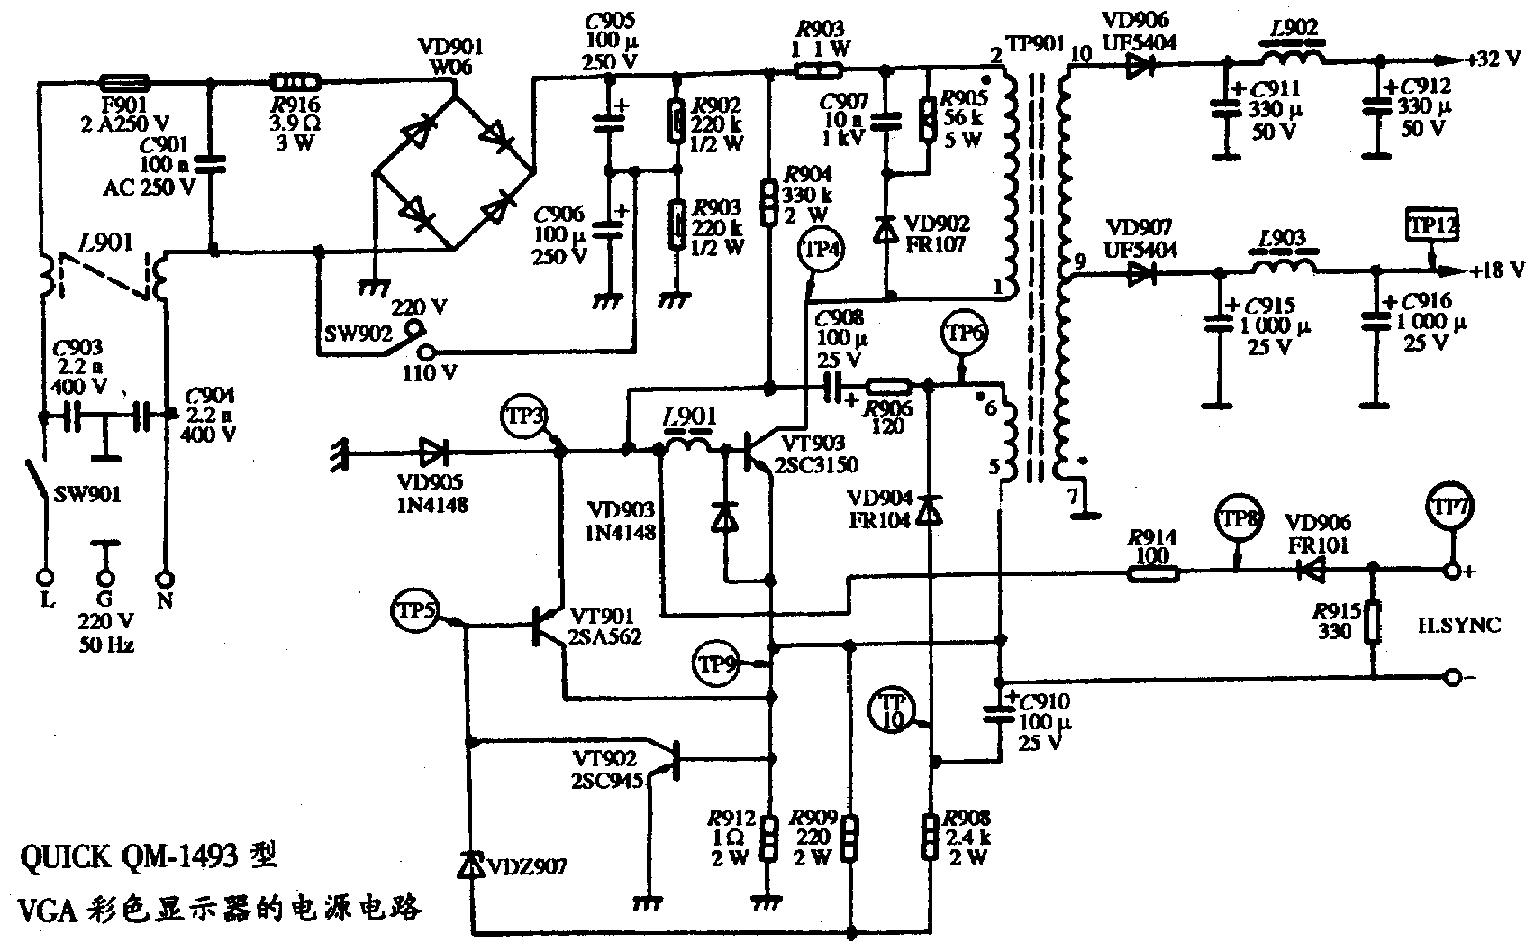 QUICK QM-1493型VGA彩色显示器的电源电路图